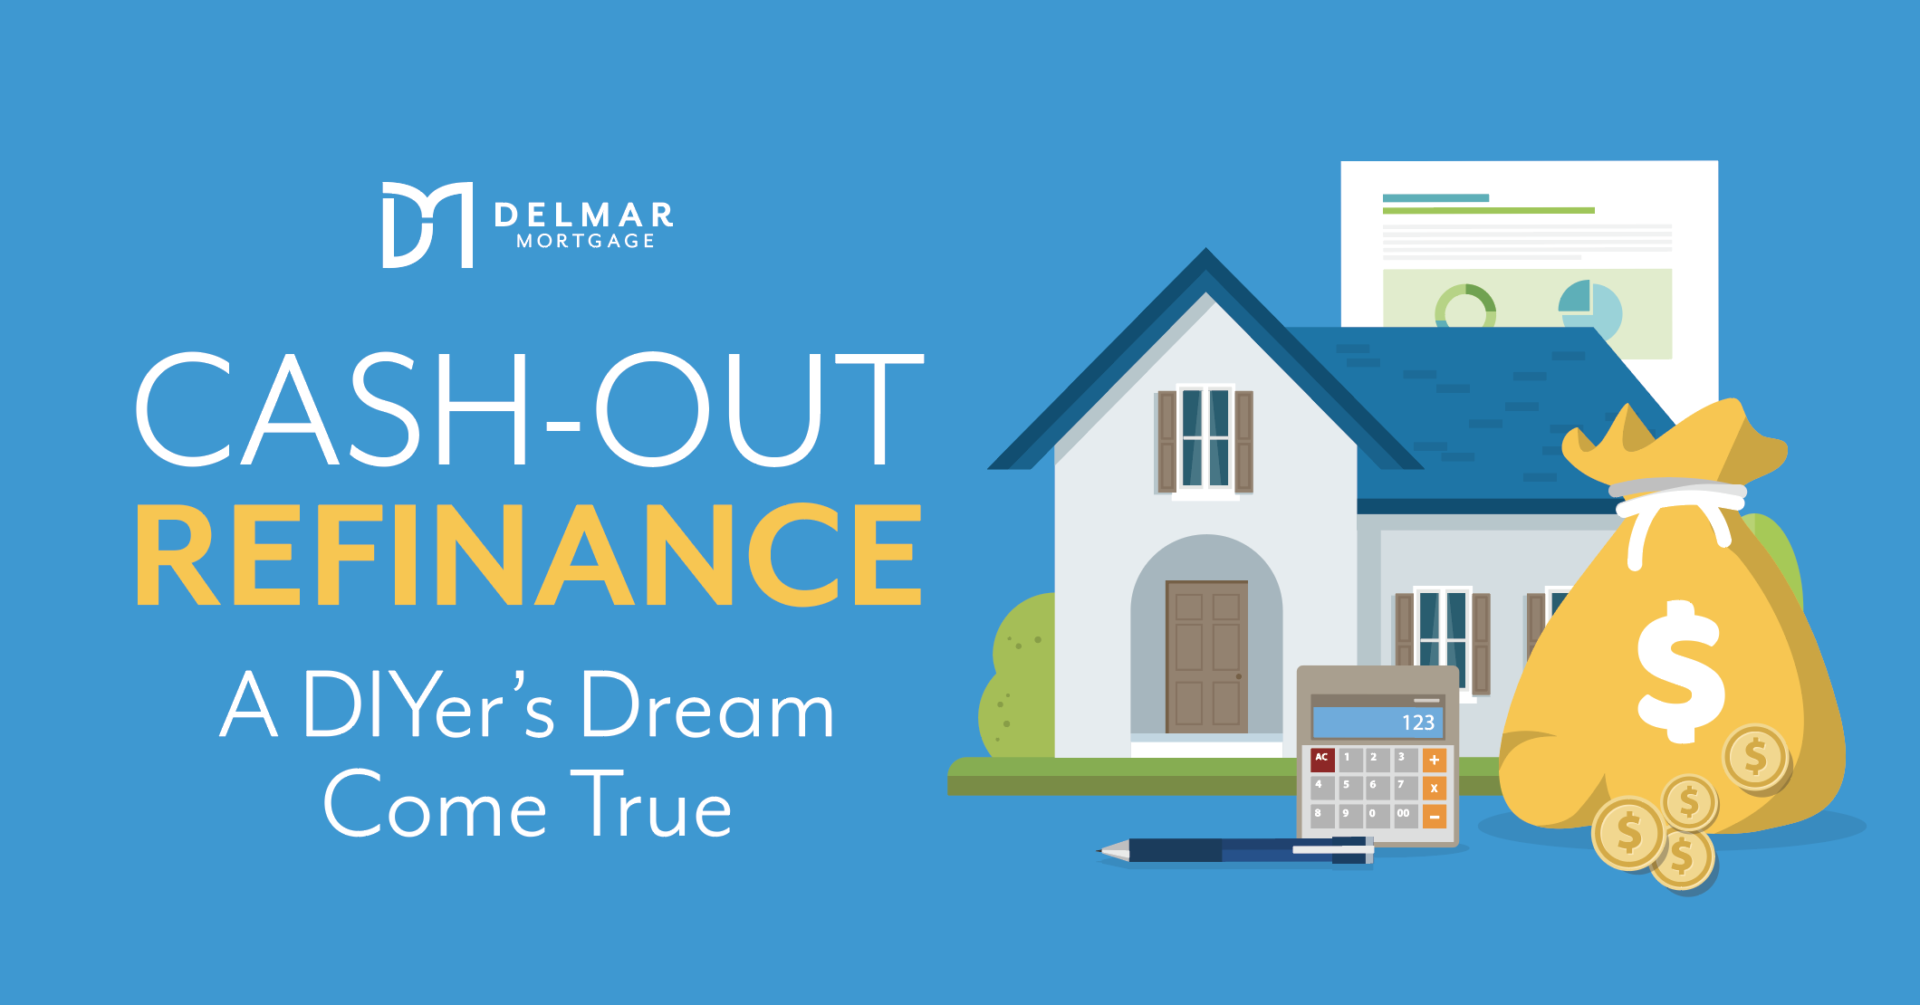 16 Best Atlanta Mortgage Refinance Companies - Expertise.com